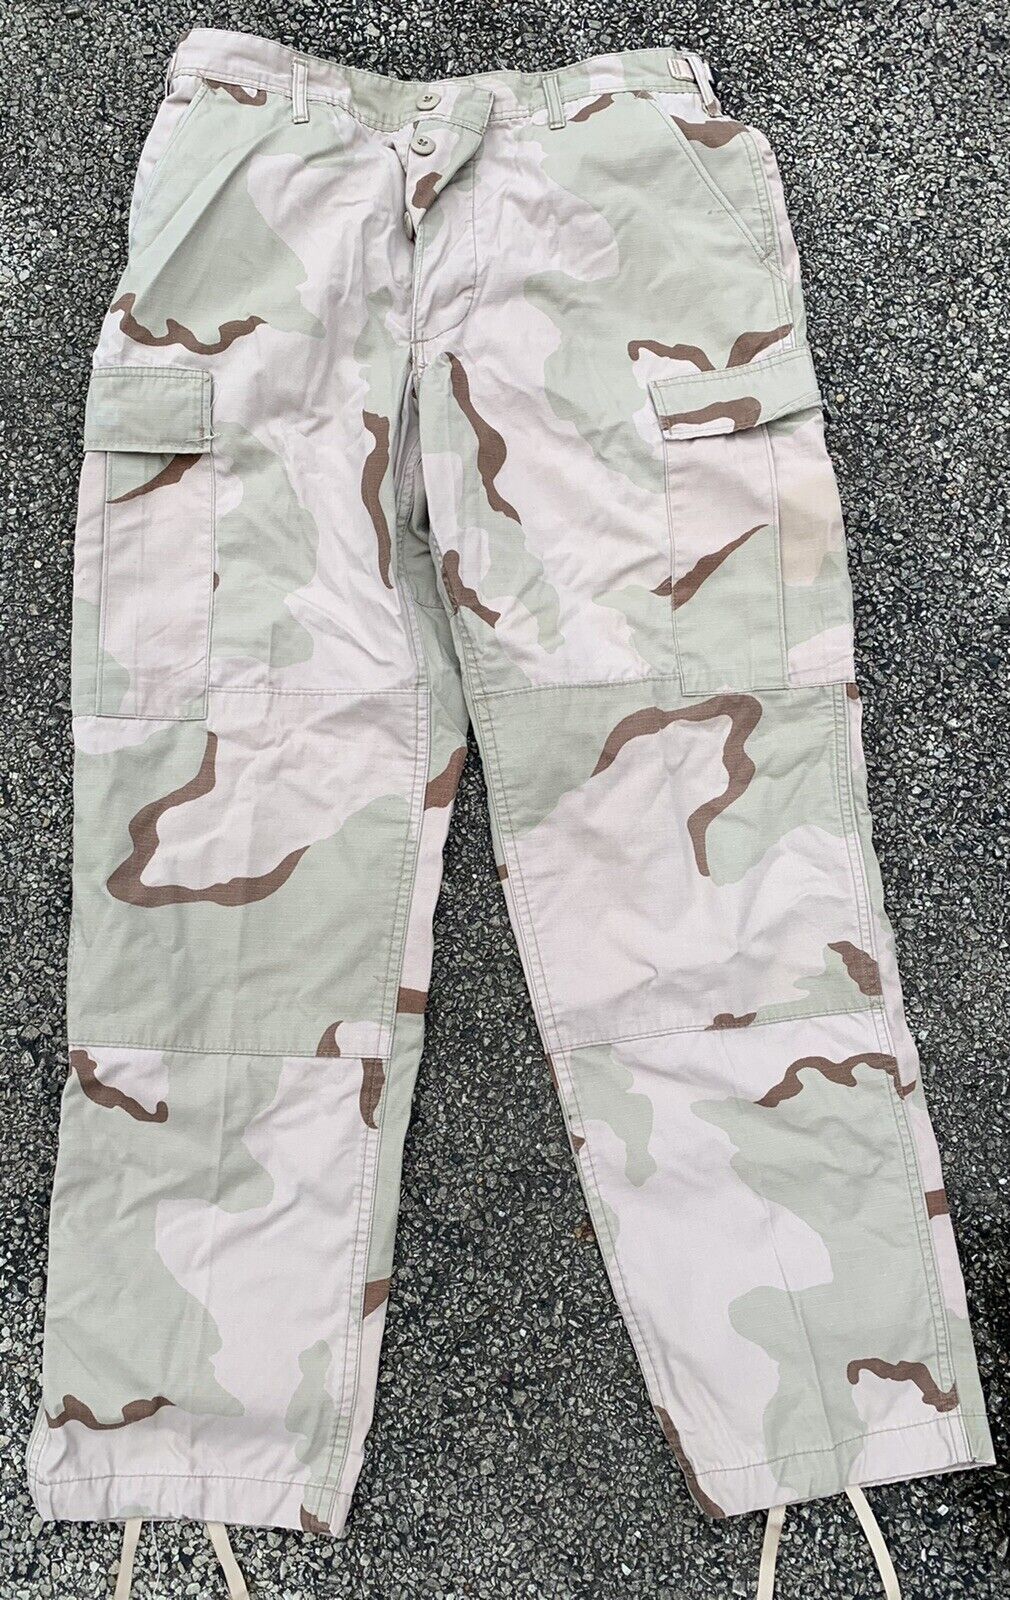 Medium Regular US Military Desert Camo BDU Uniform Pants